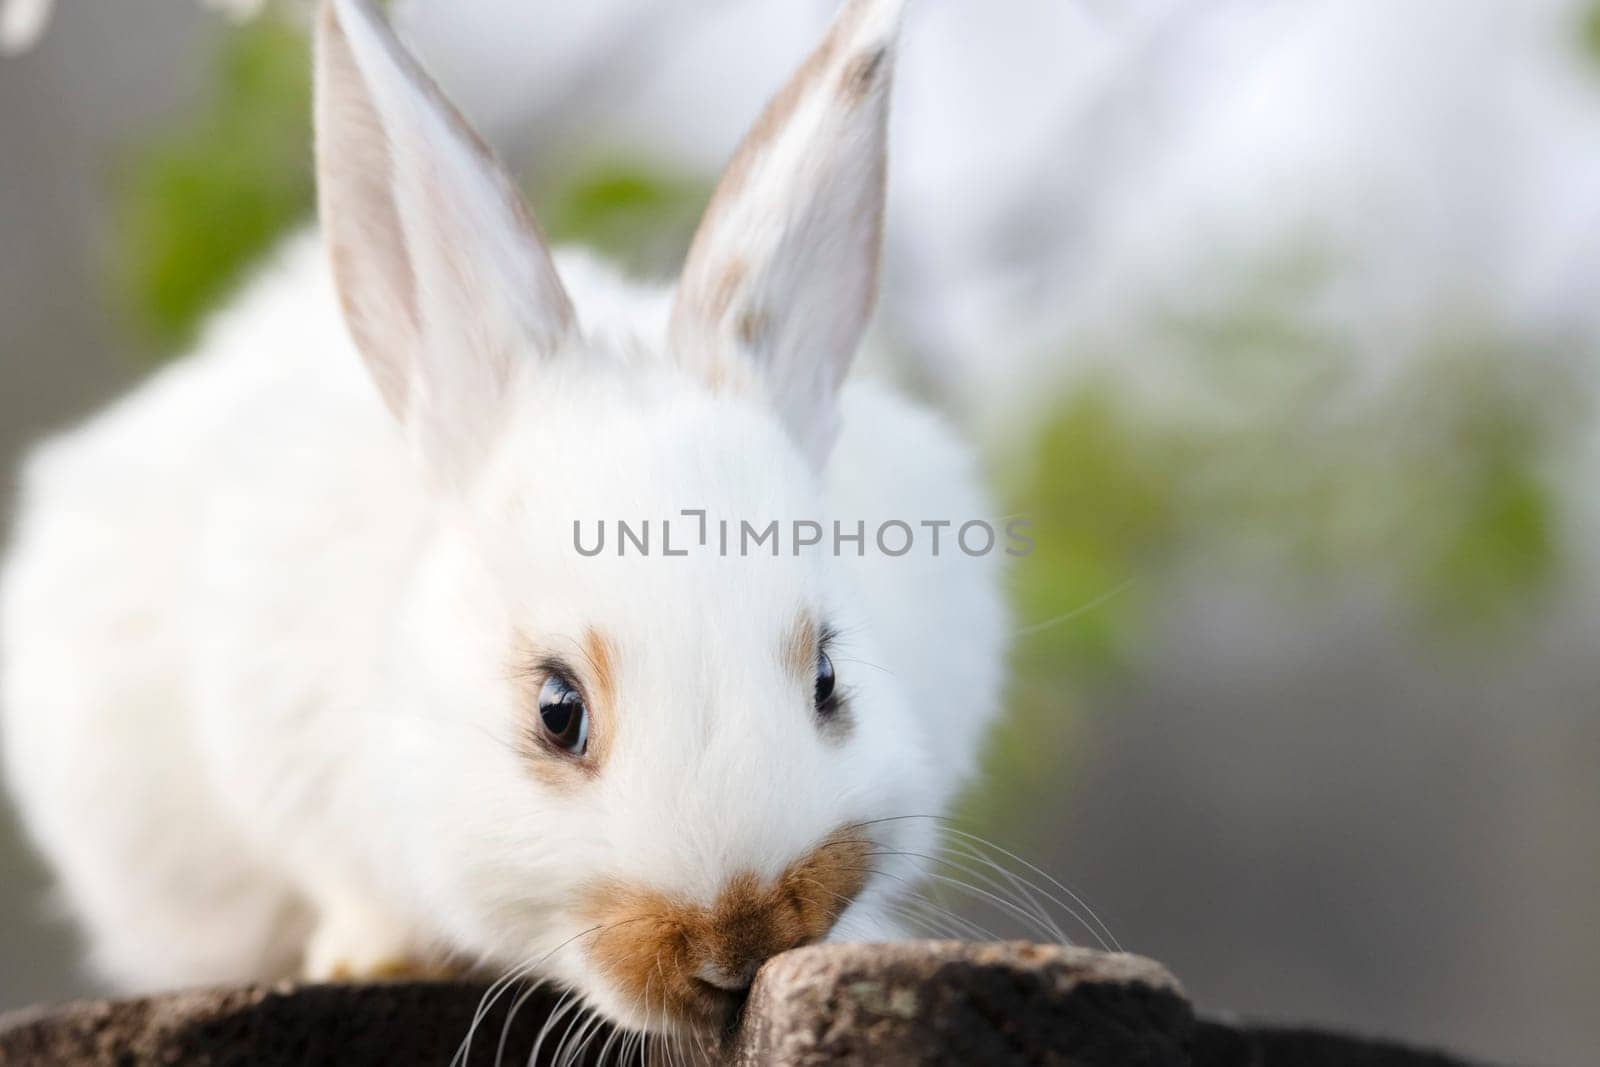 beautiful rabbit, close-up and long eyelashes by drakuliren